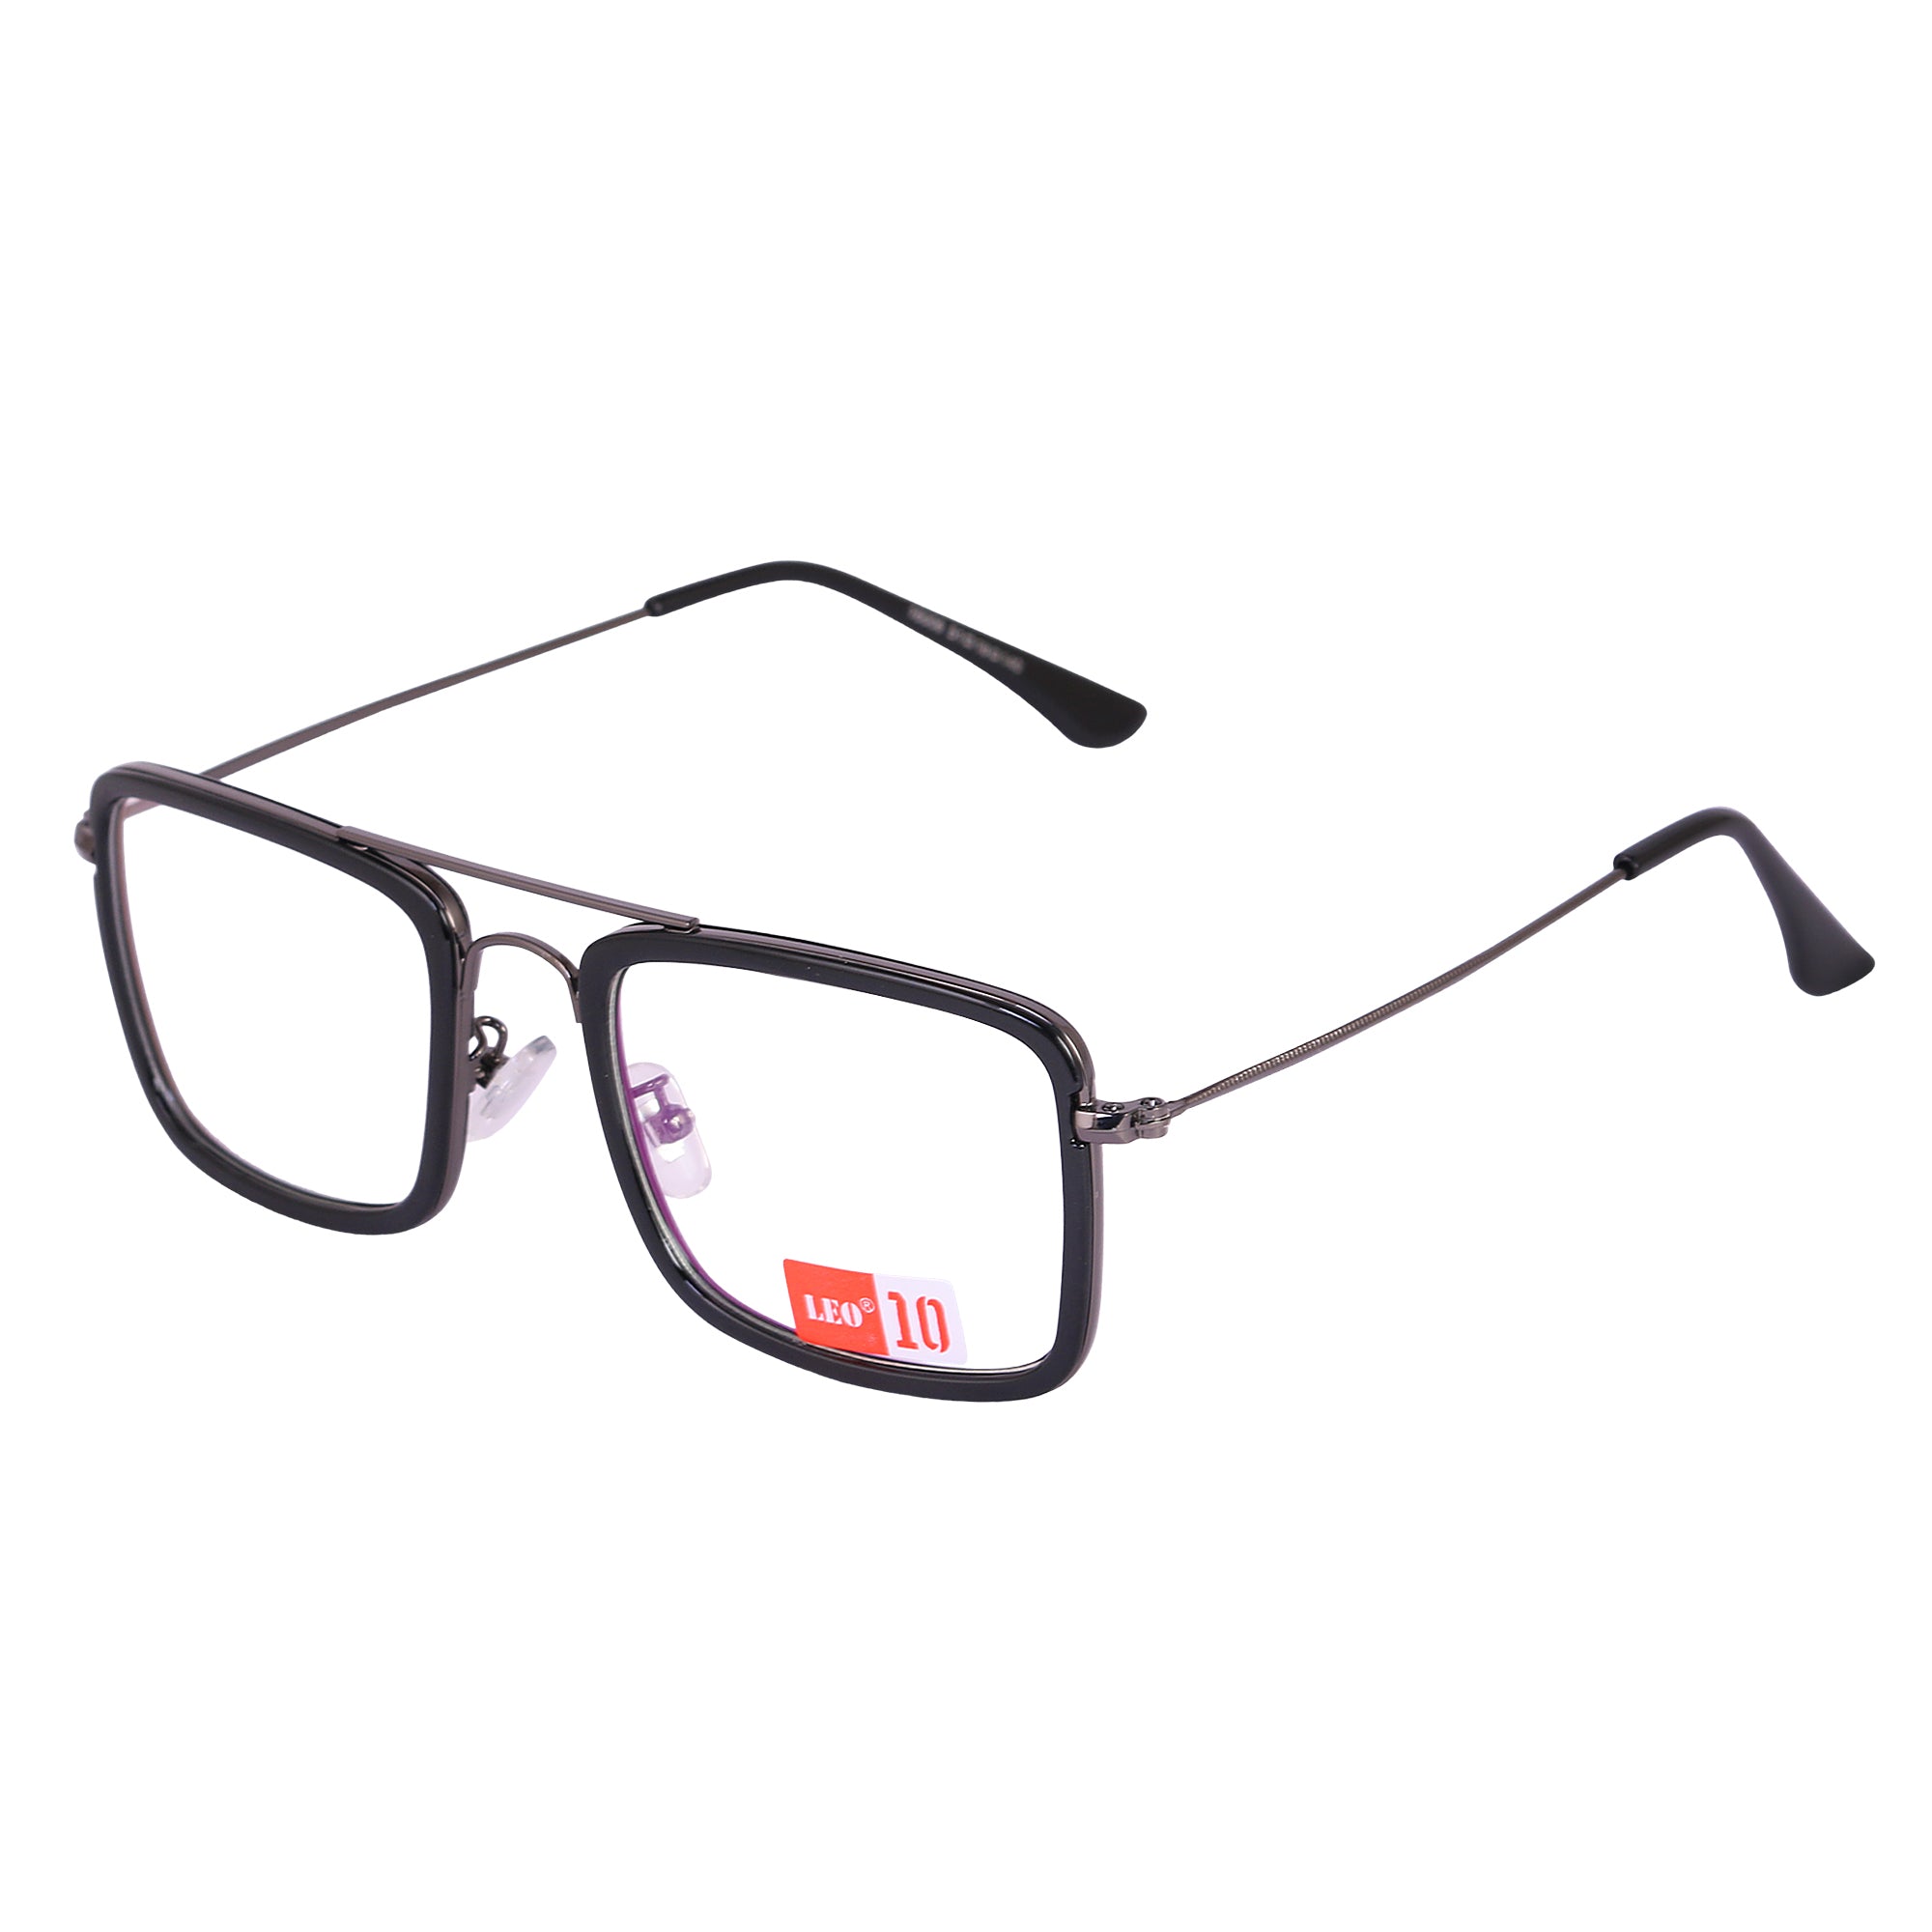 BLACK GUN Square Rimmed Eyeglasses -L16006